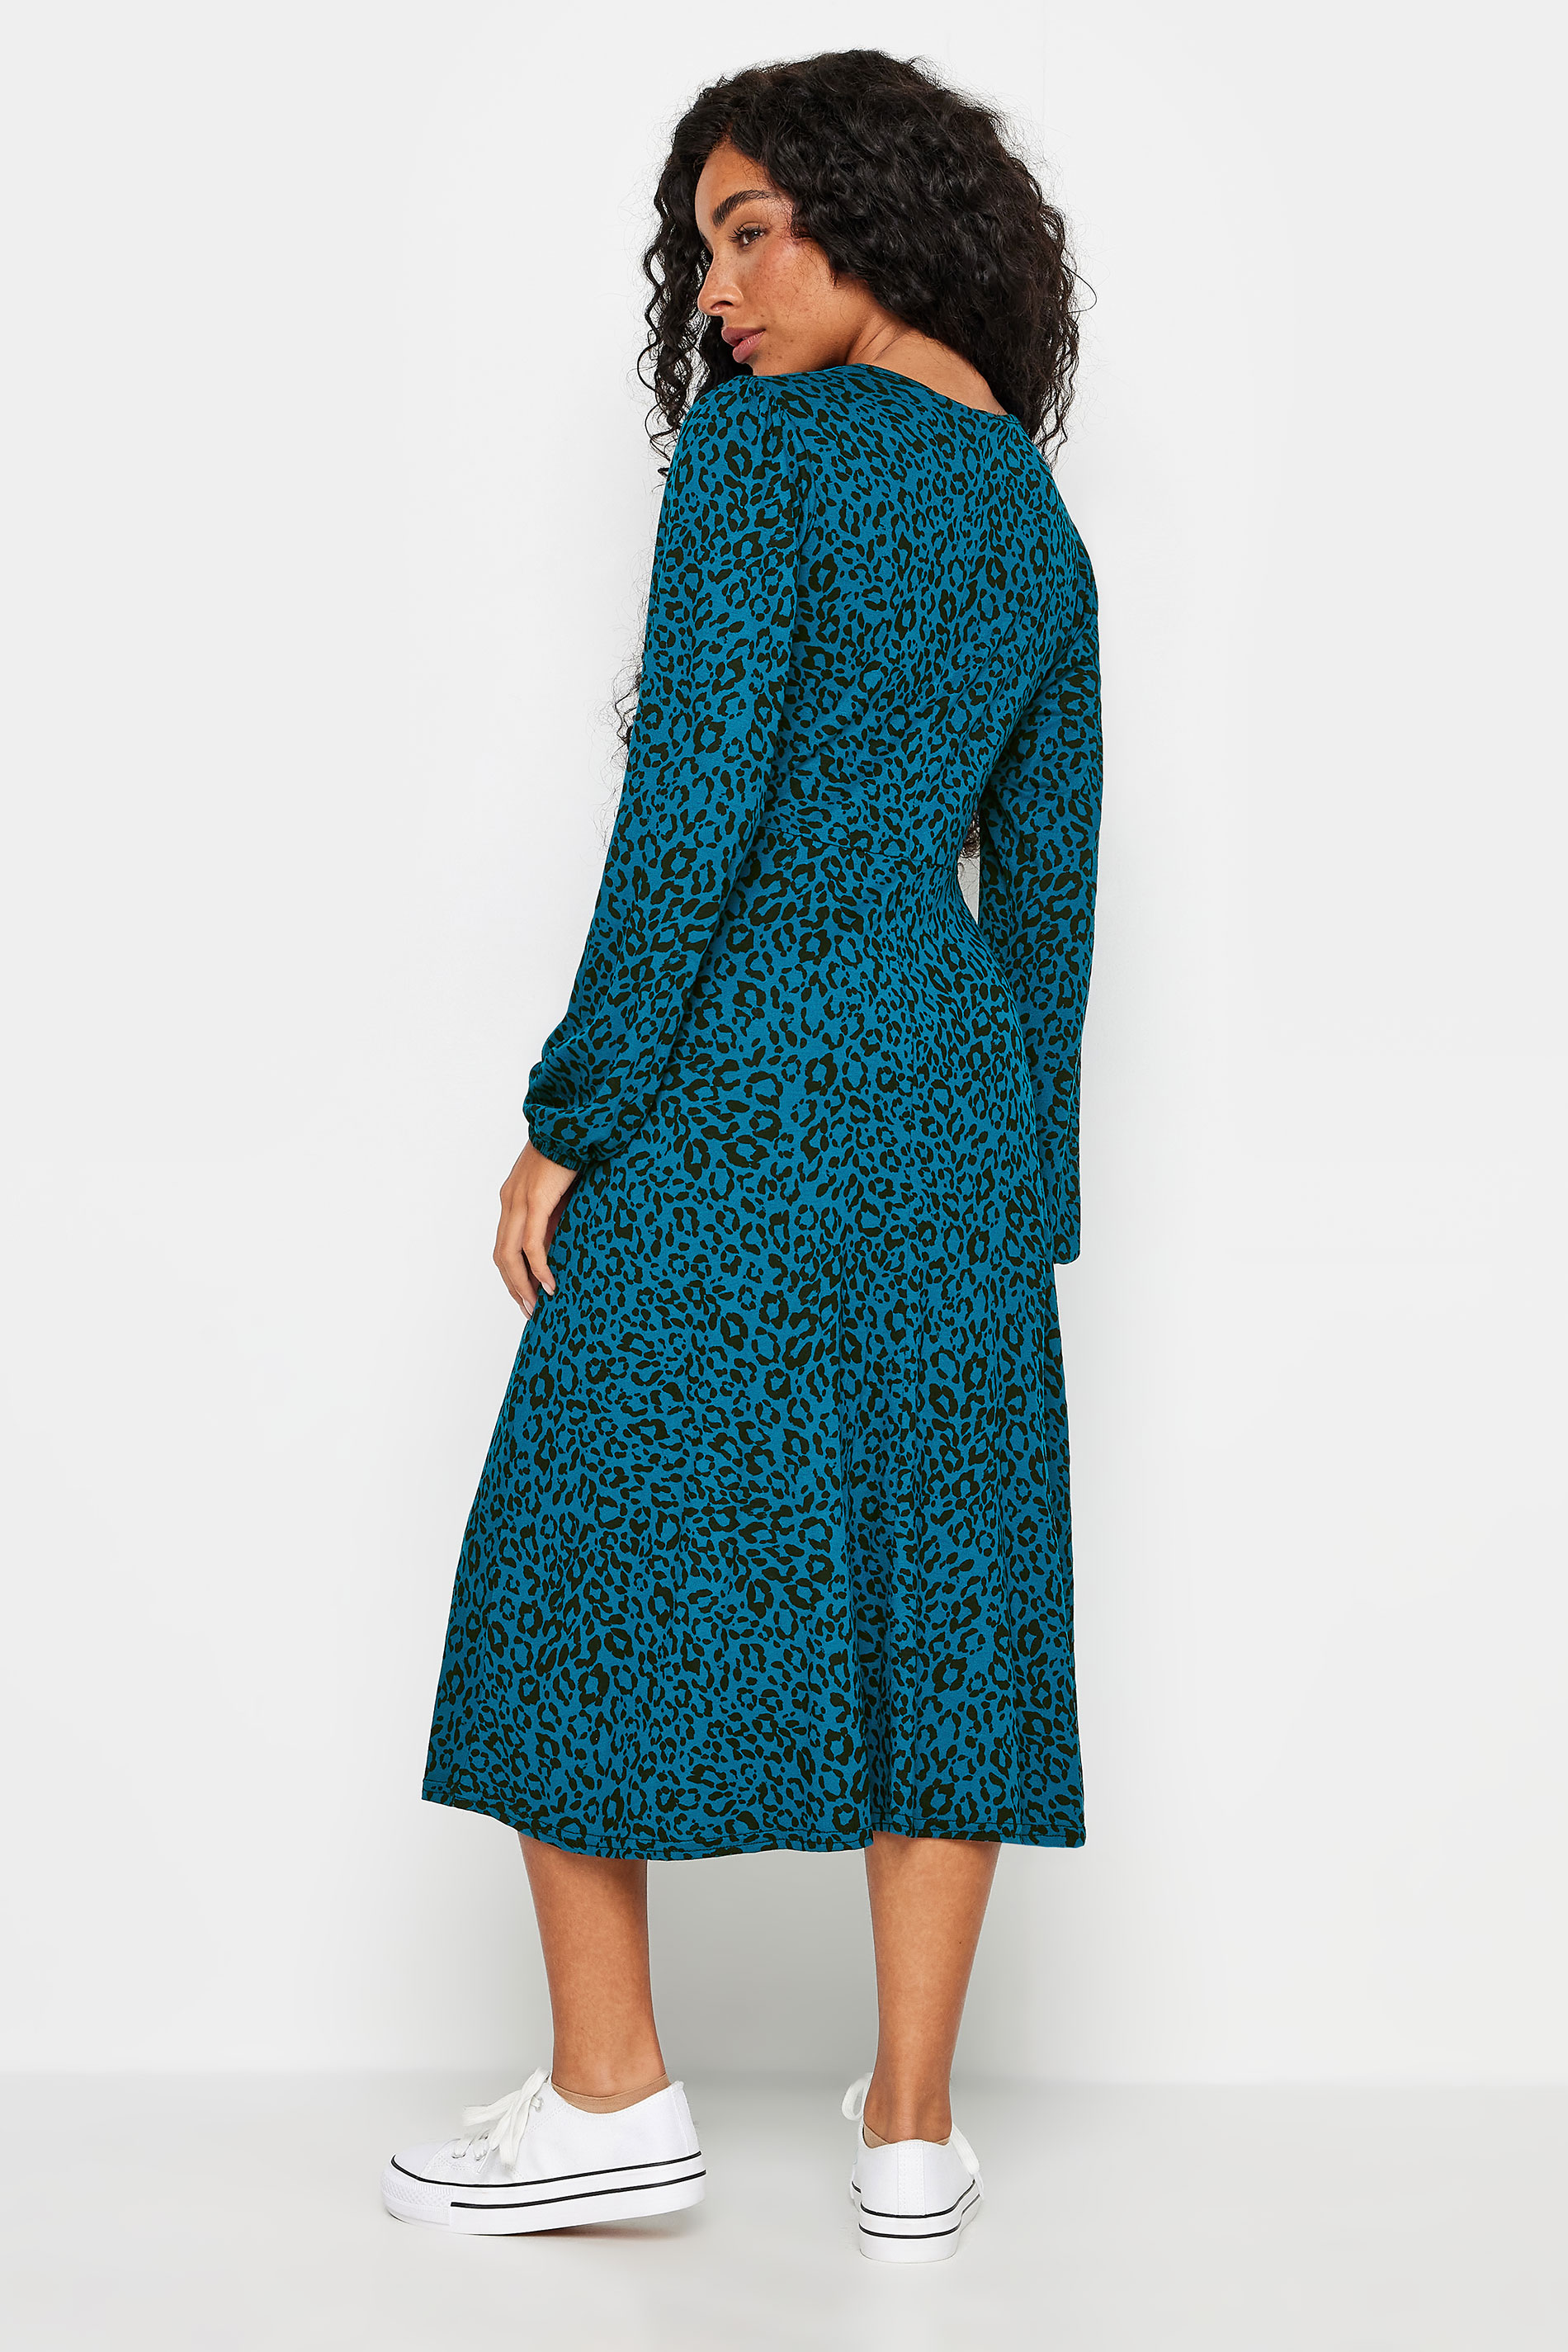 M&Co Petite Blue Leopard Print Midi Dress | M&Co 3